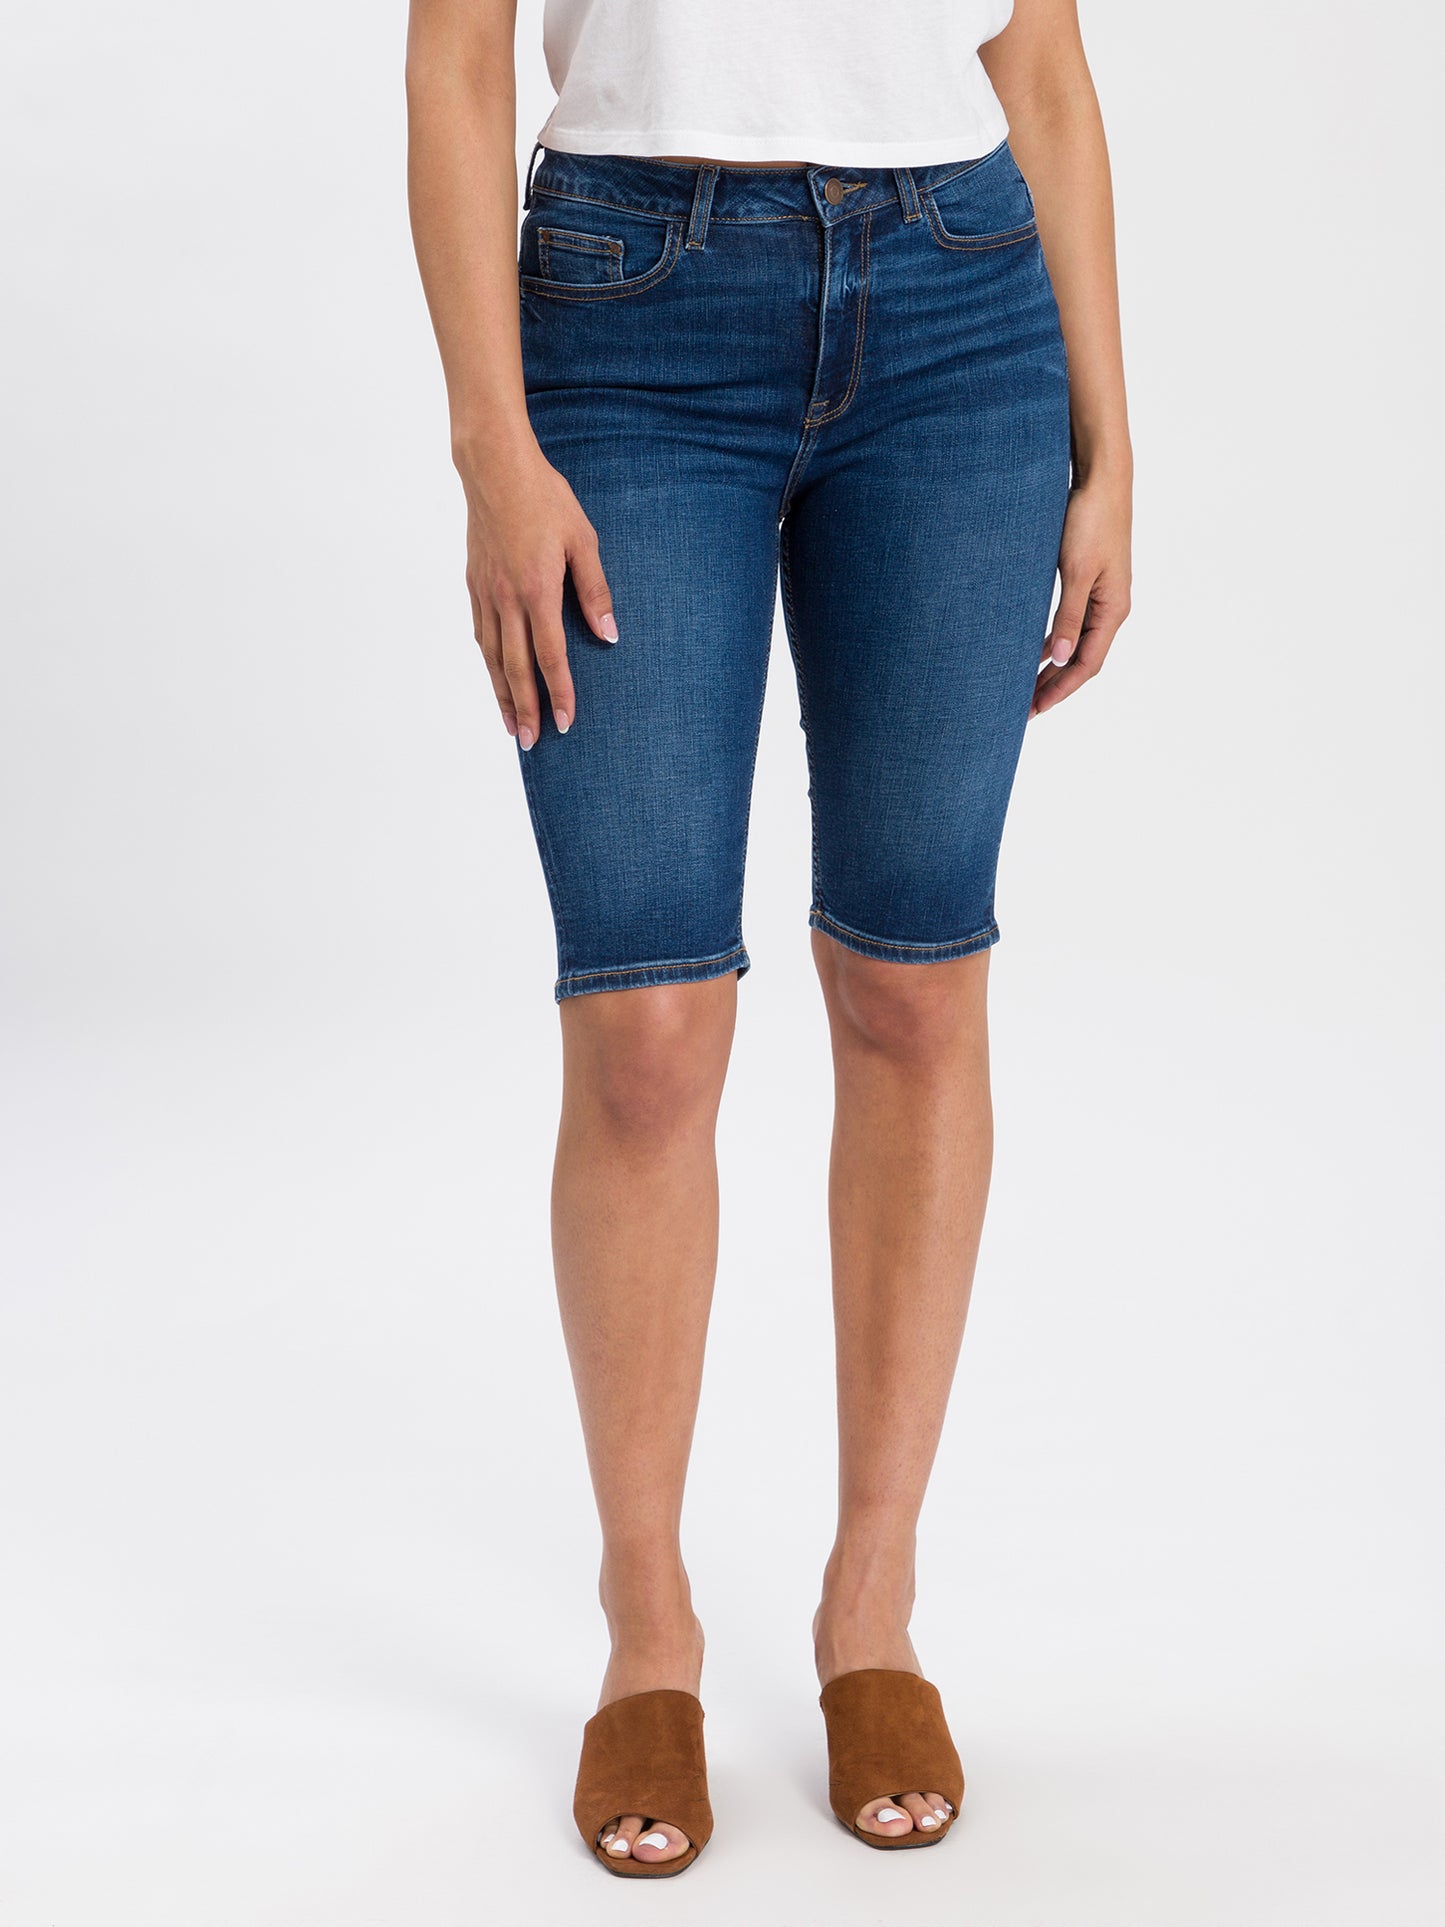 Women's jeans shorts dark blue